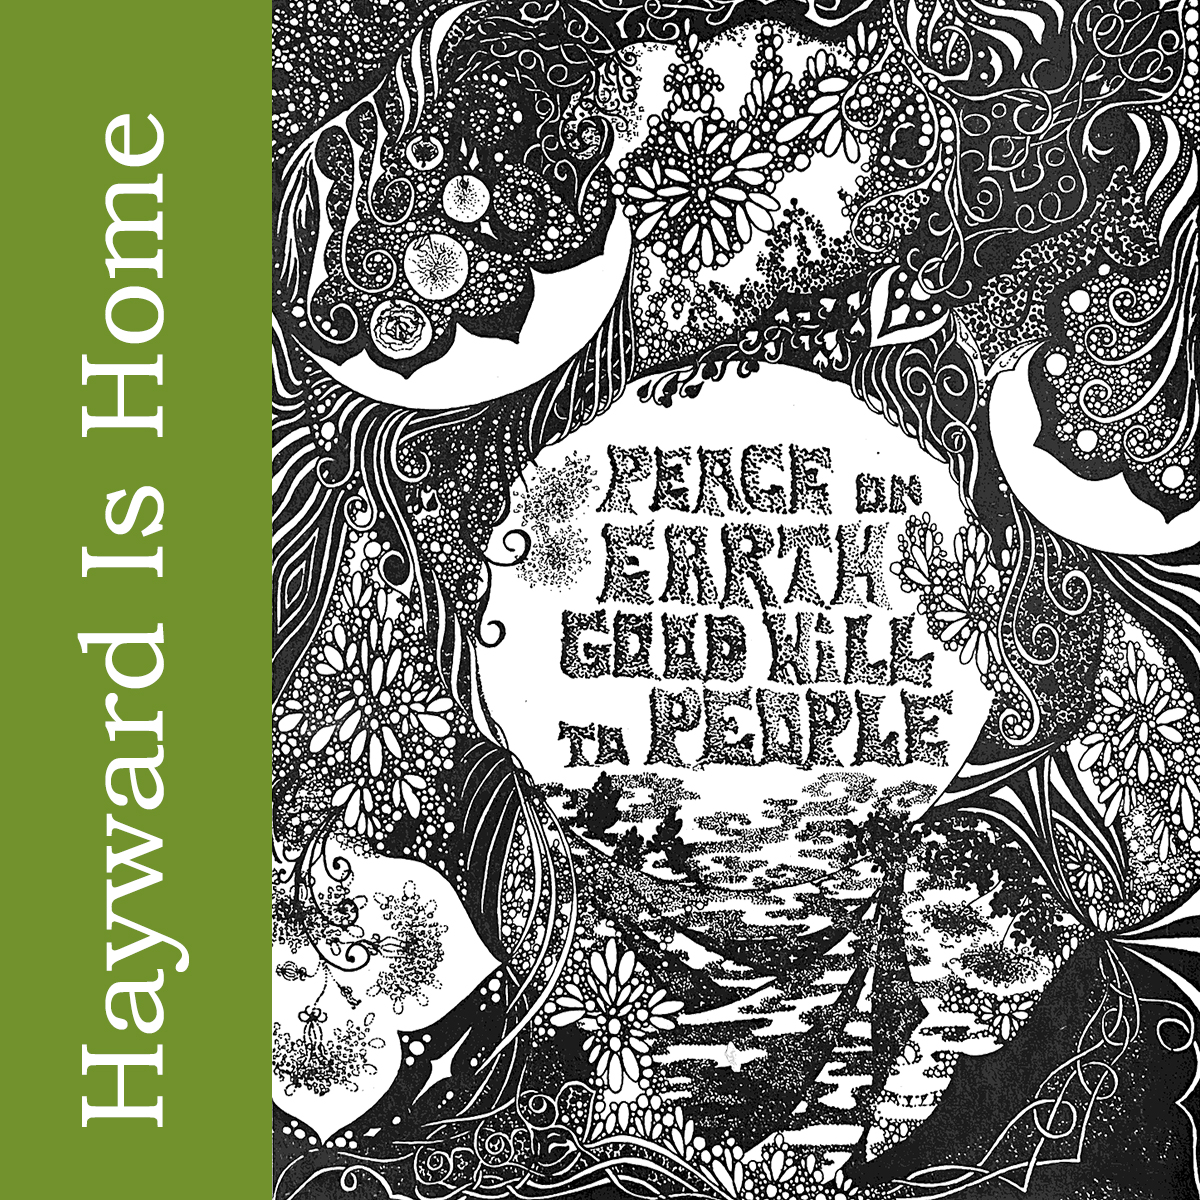 Hayward is Home - Peace on Earth artwork